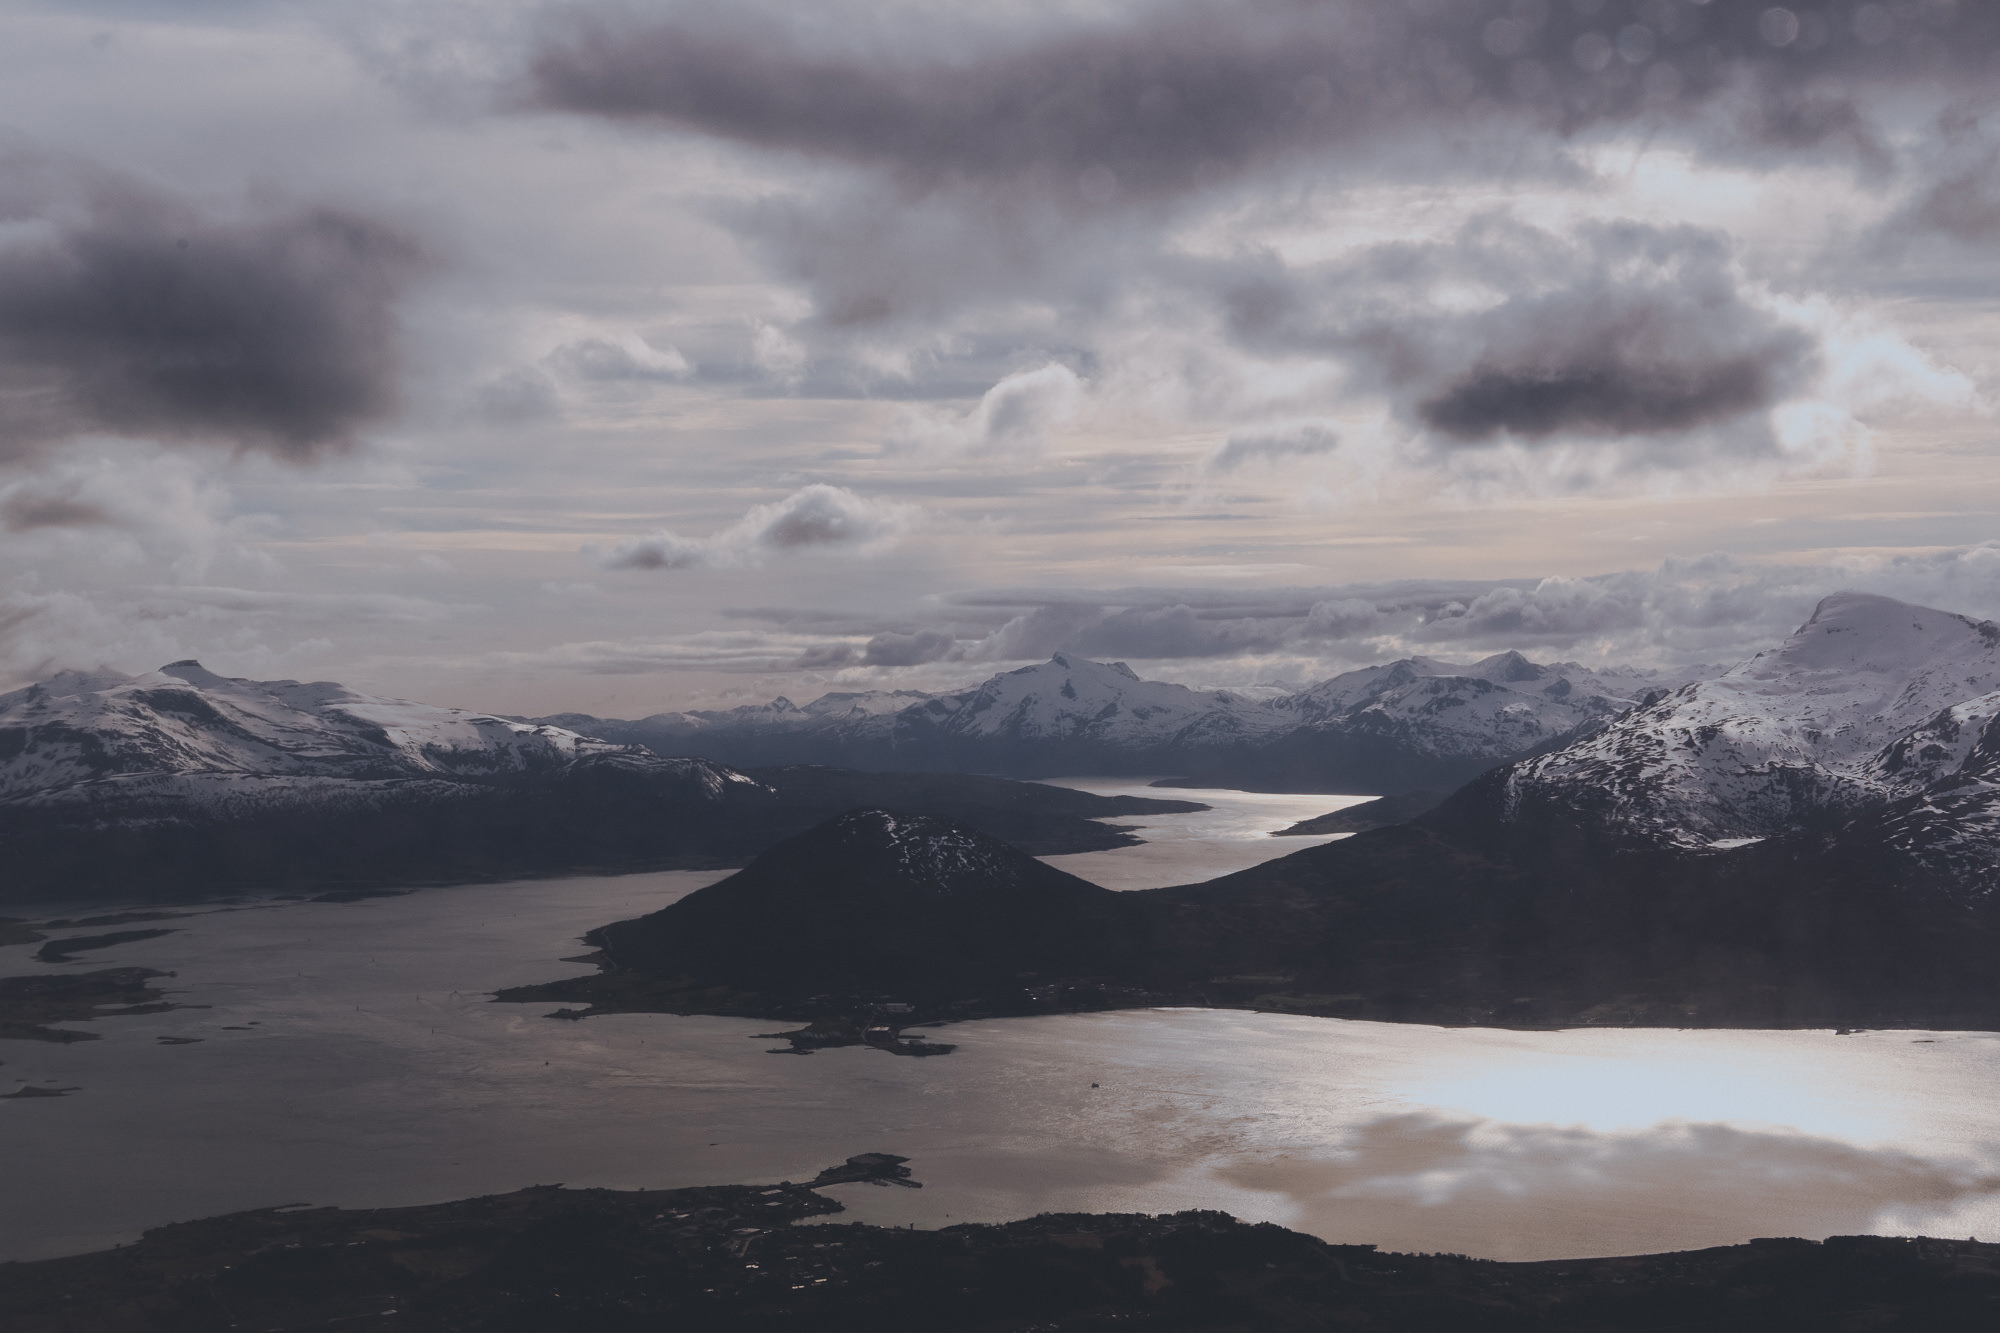 Lofoten Islands Photography